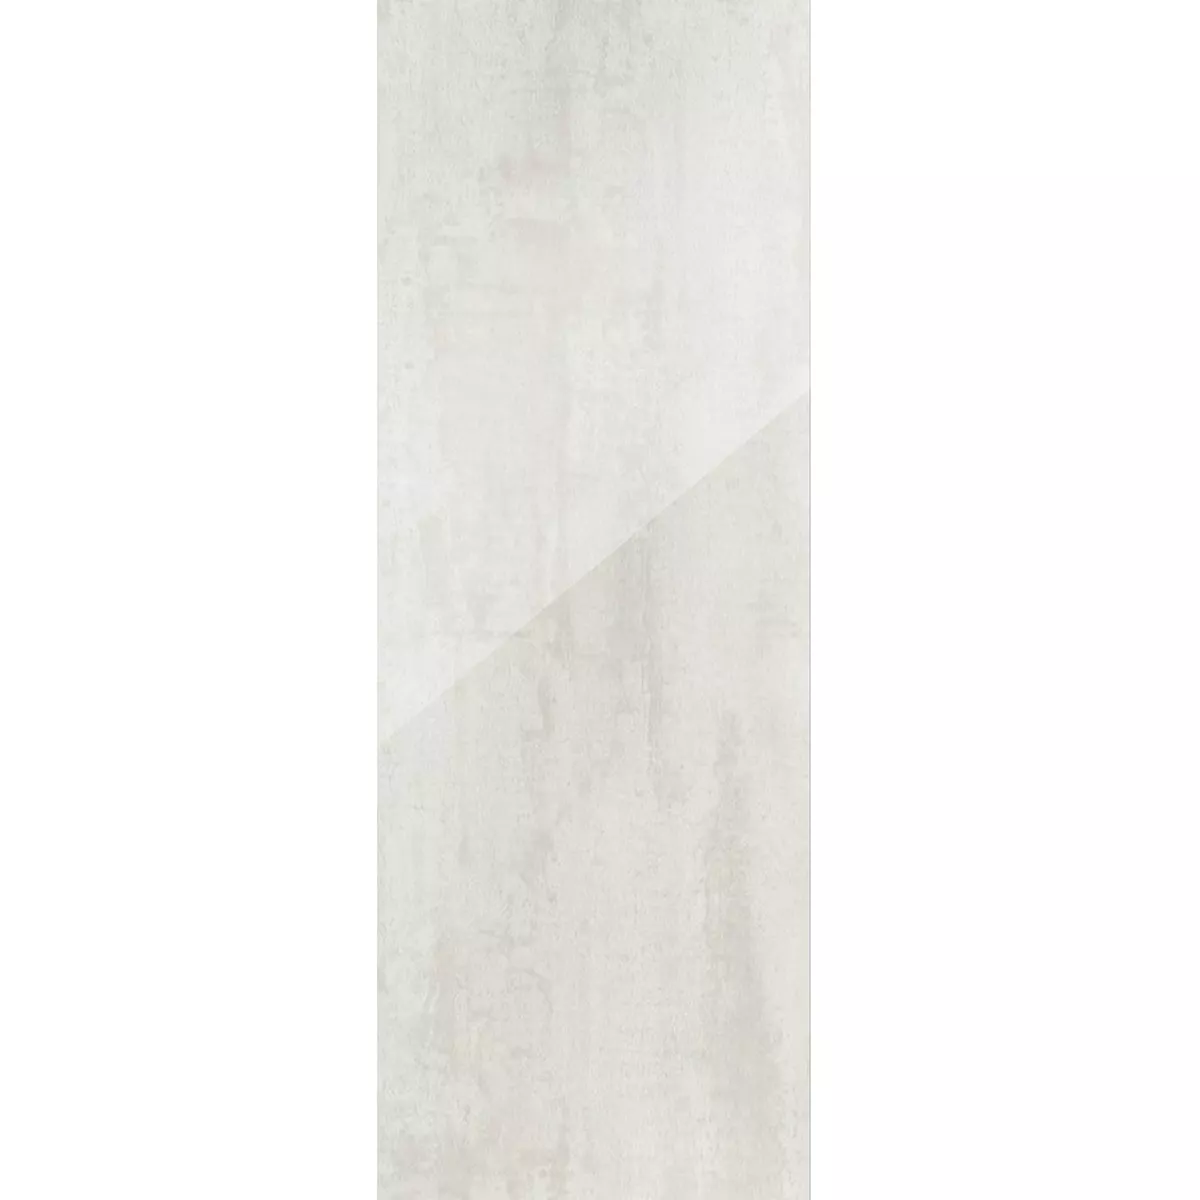 Podlahové Dlaždice Herion Kovový Vzhled Lappato Blanco 45x90cm